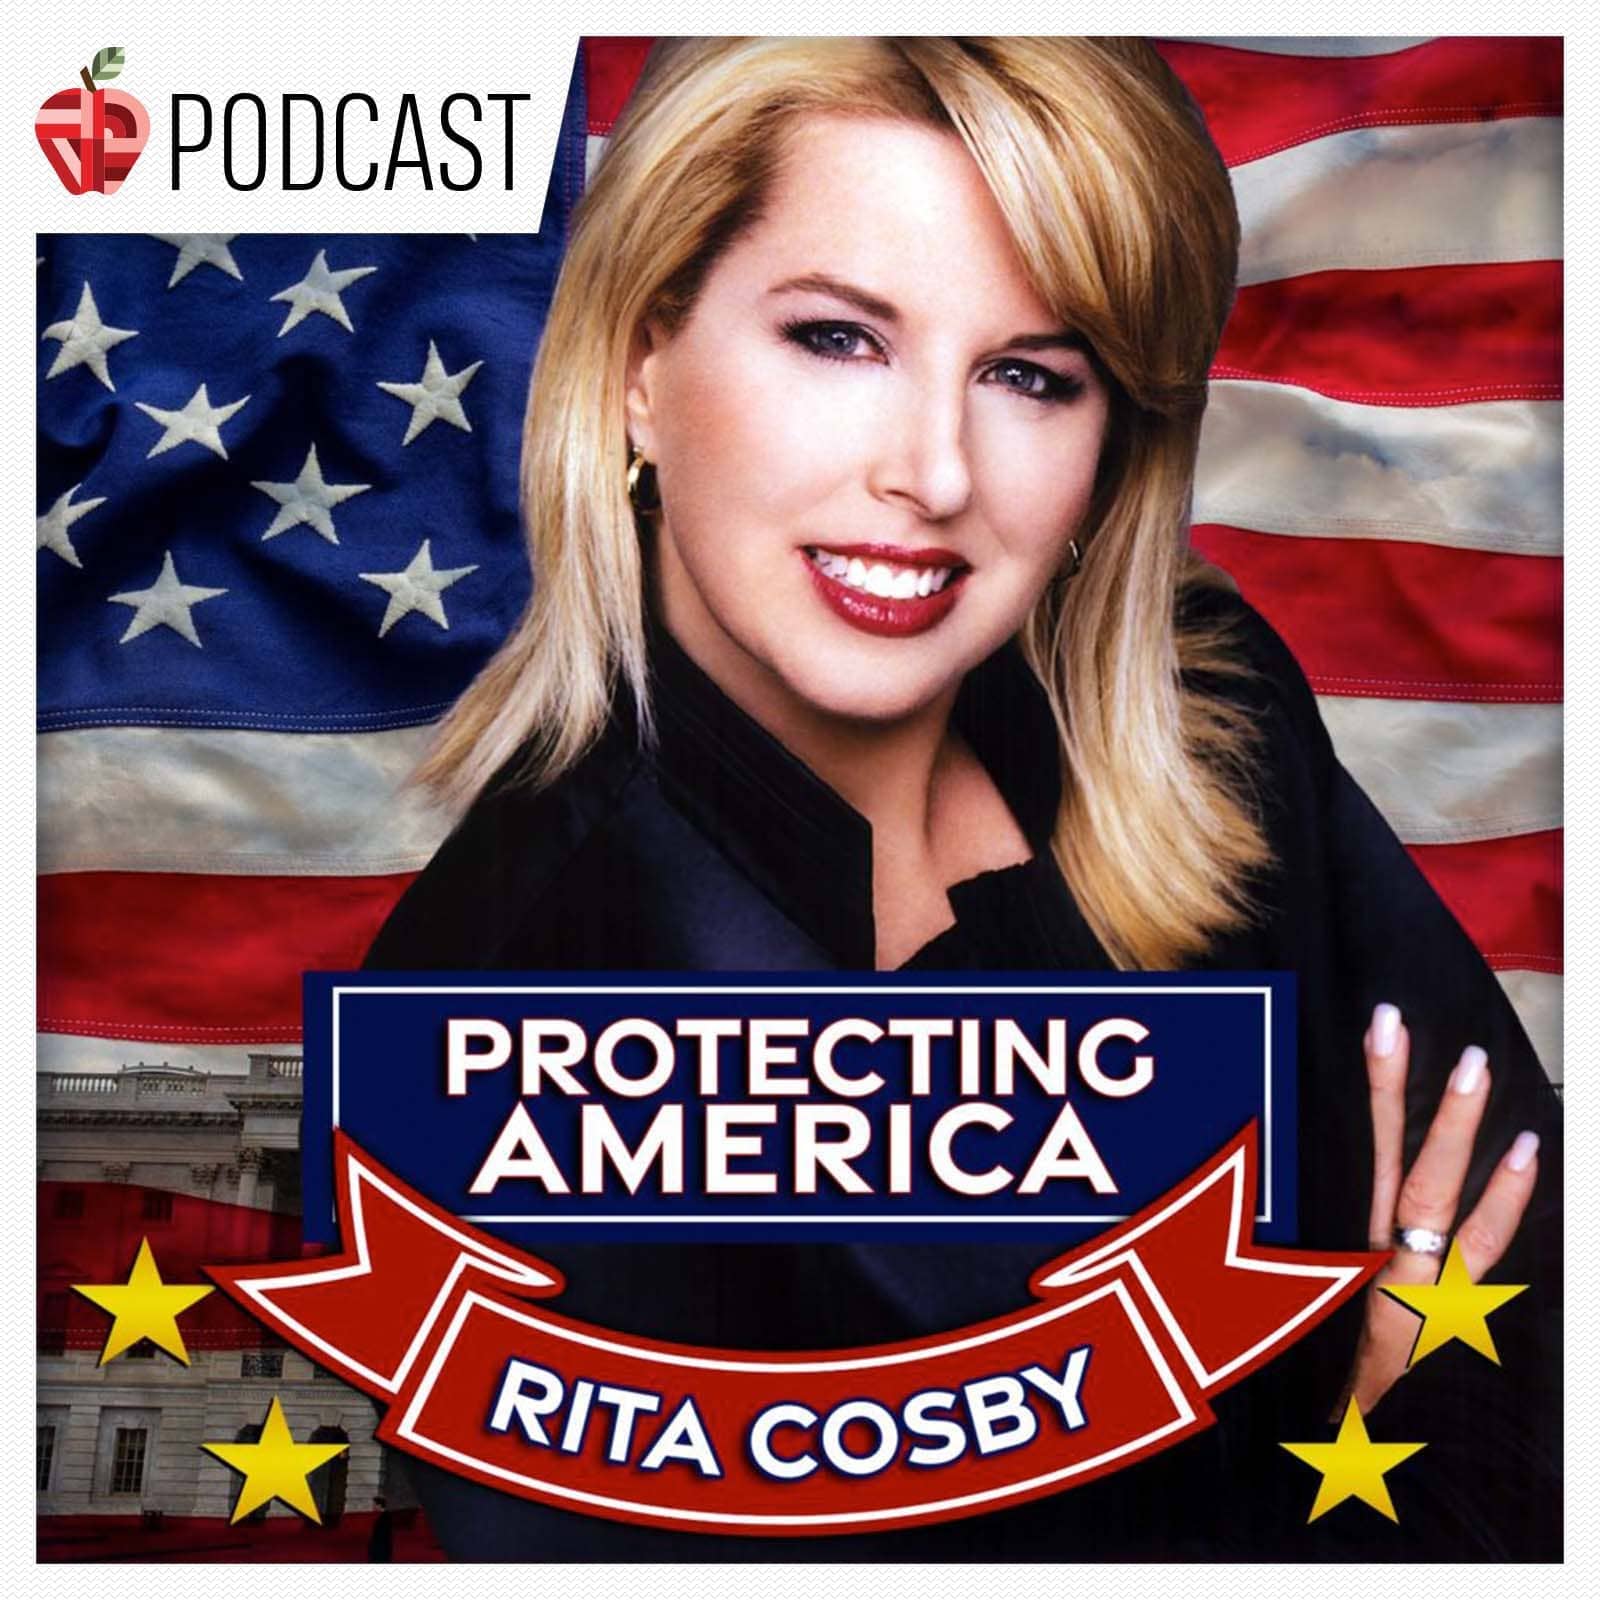 rita-cosby-protecting-america-correct-podcast-new-logo-22